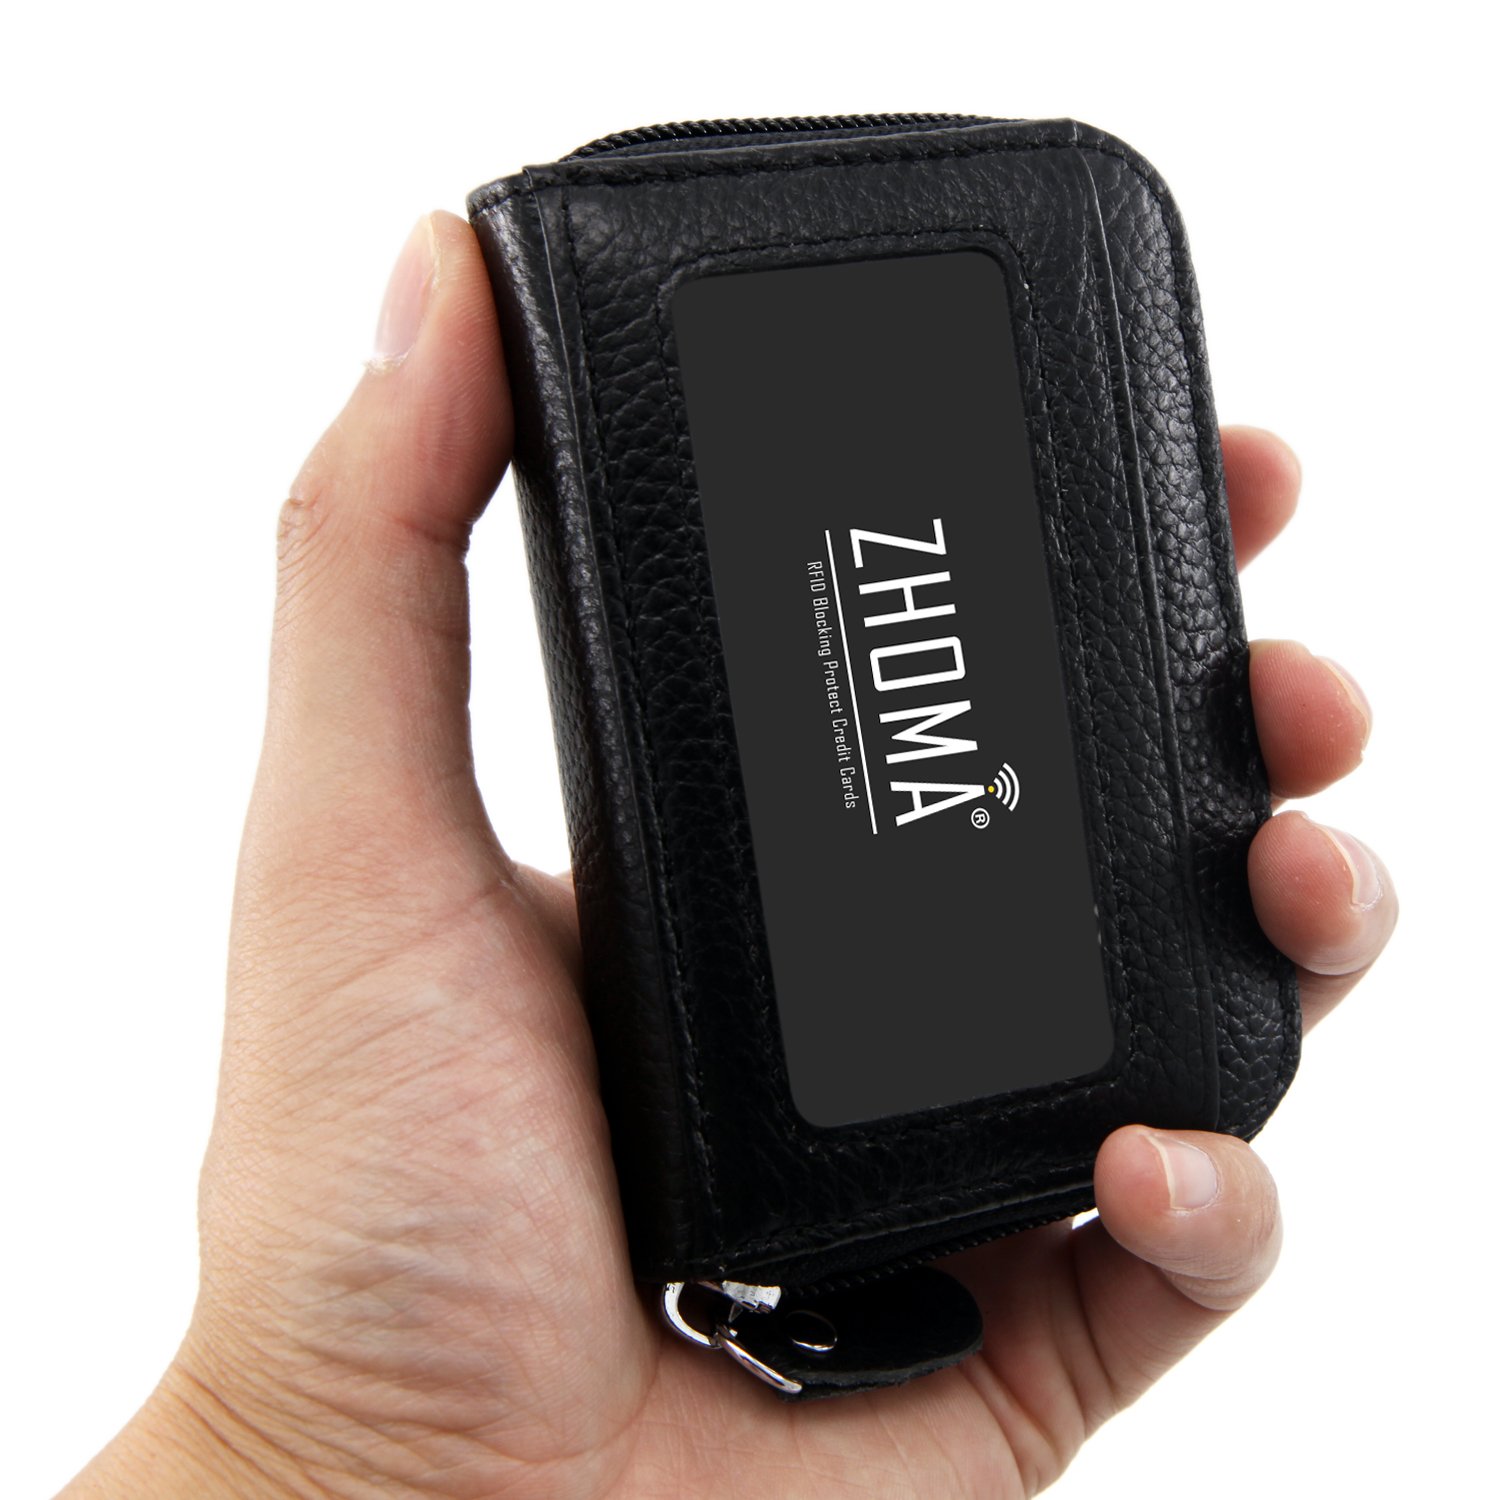 ZHOMA RFID Blocking Genuine Leather Credit Card Case Holder Security Travel Wallet - Black